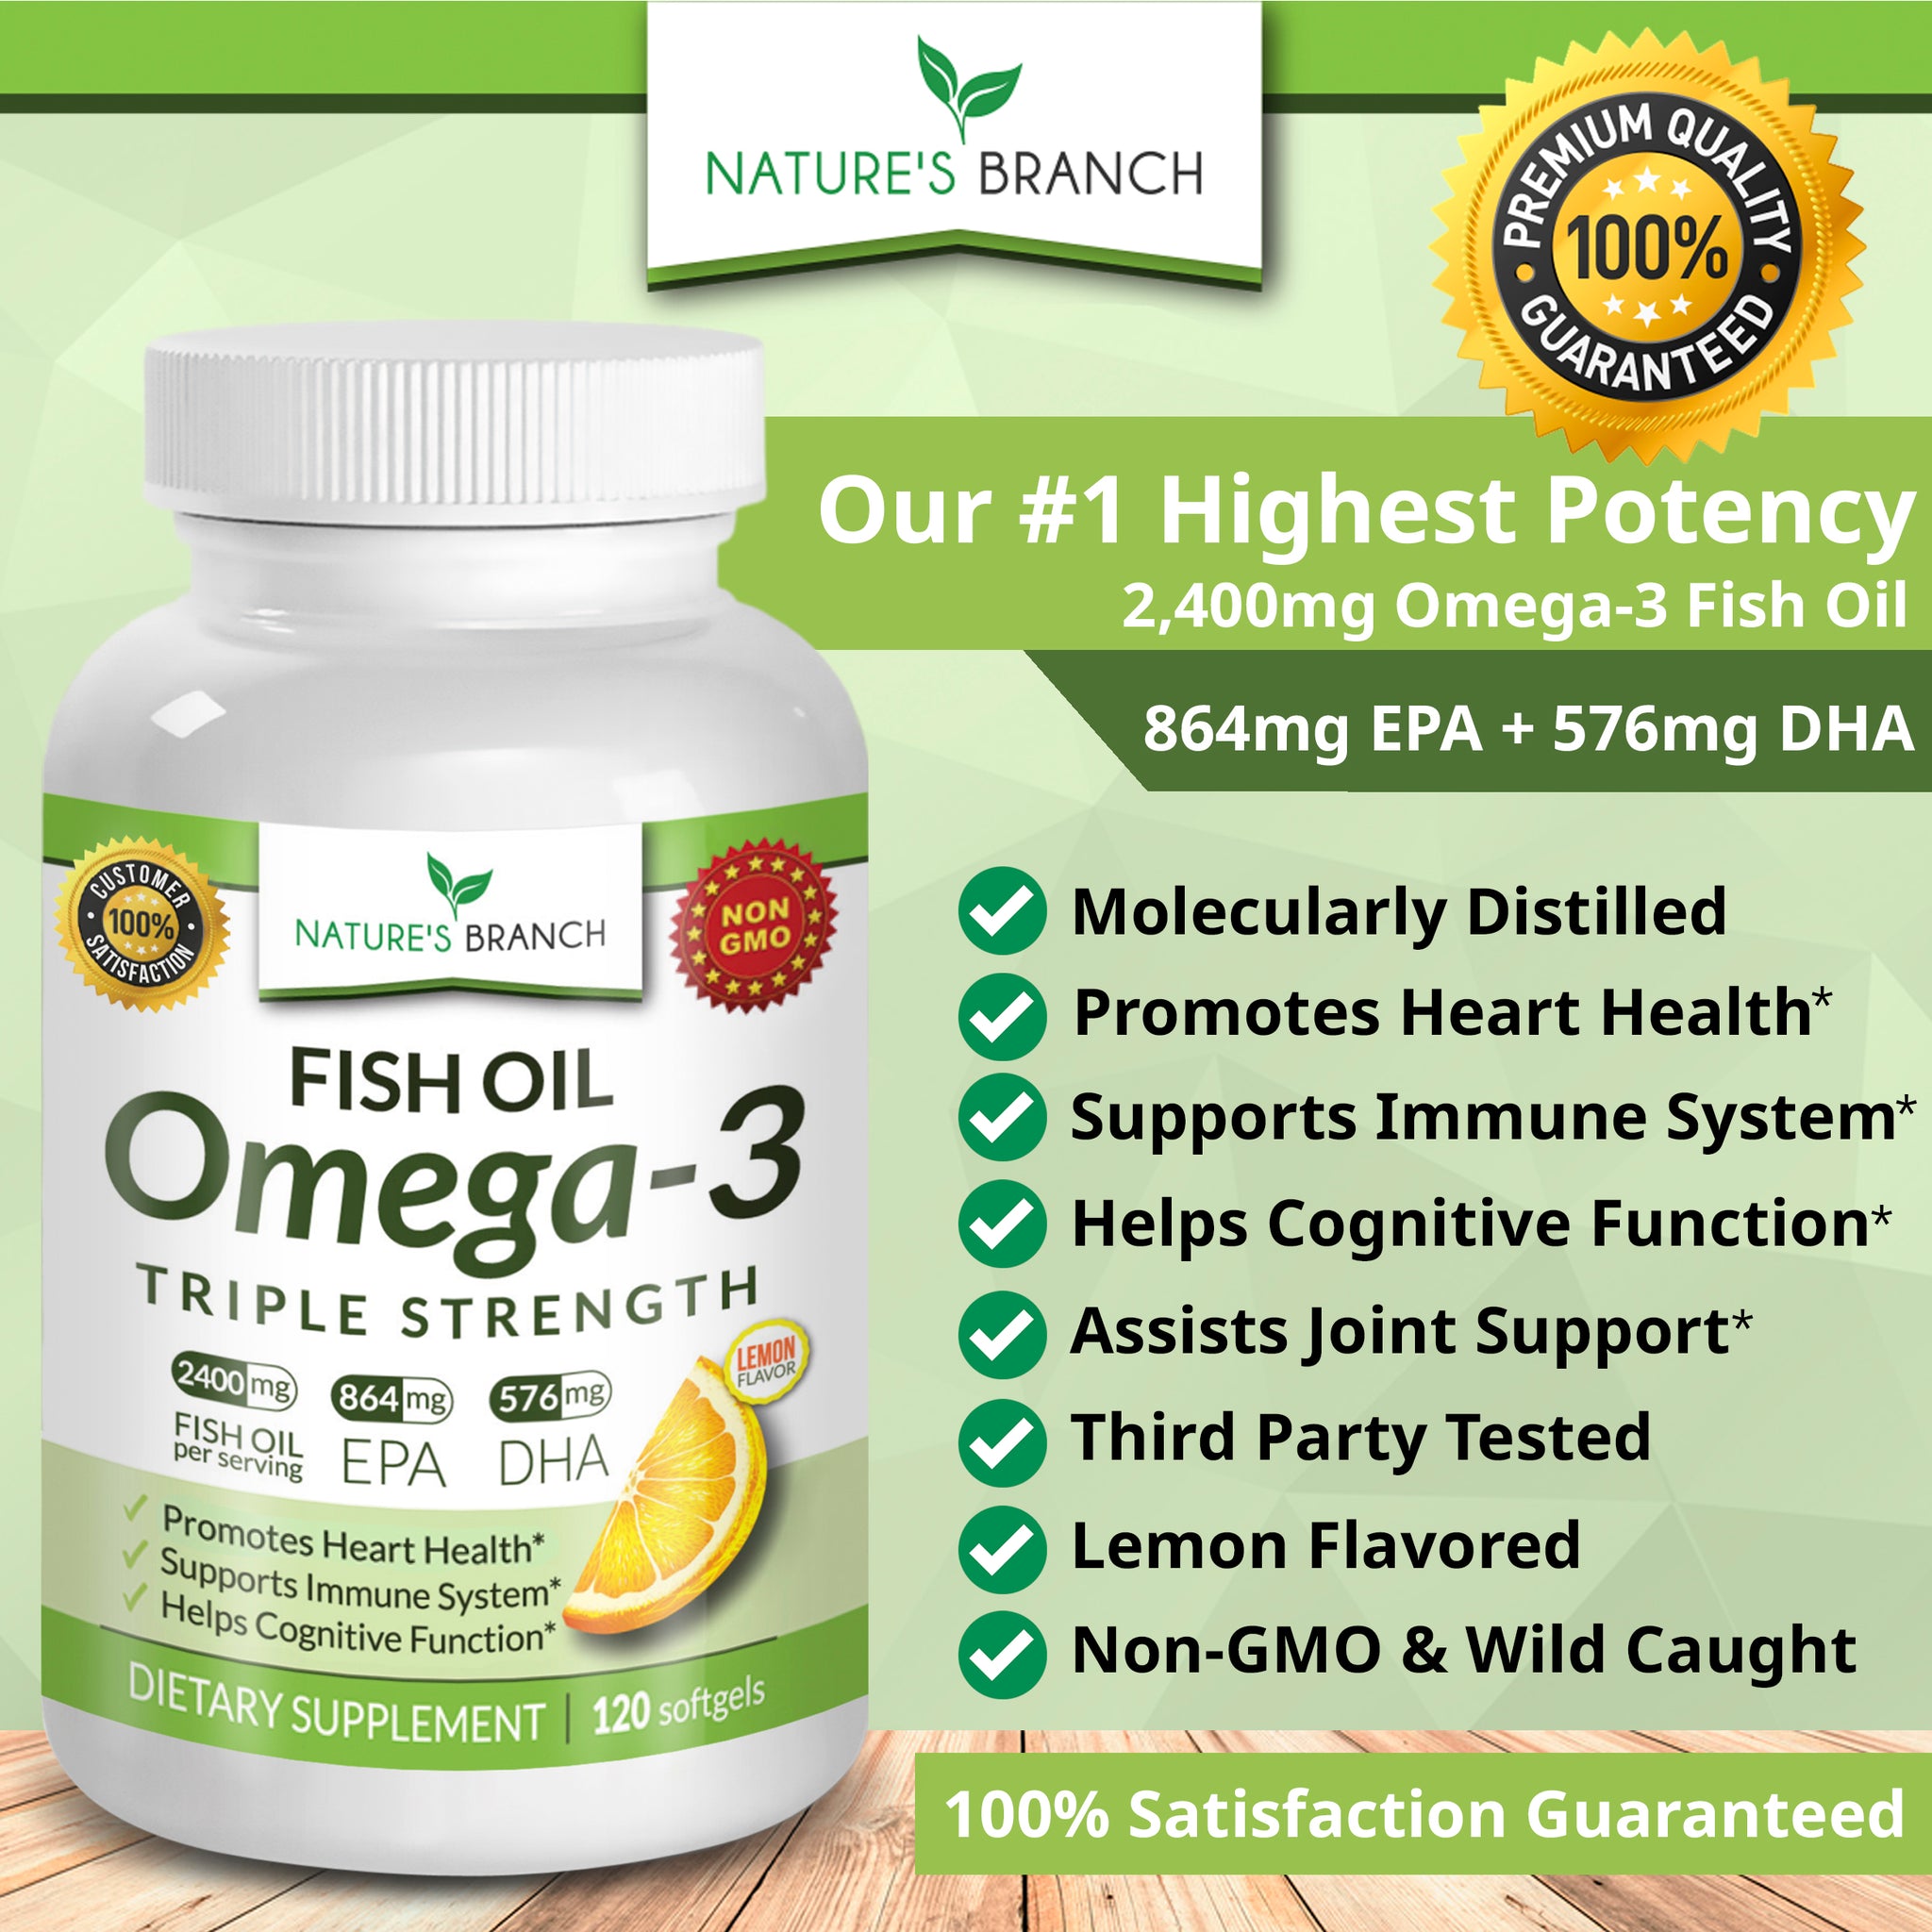  Triple Strength Omega 3 Fish Oil Supplement - 2200mg